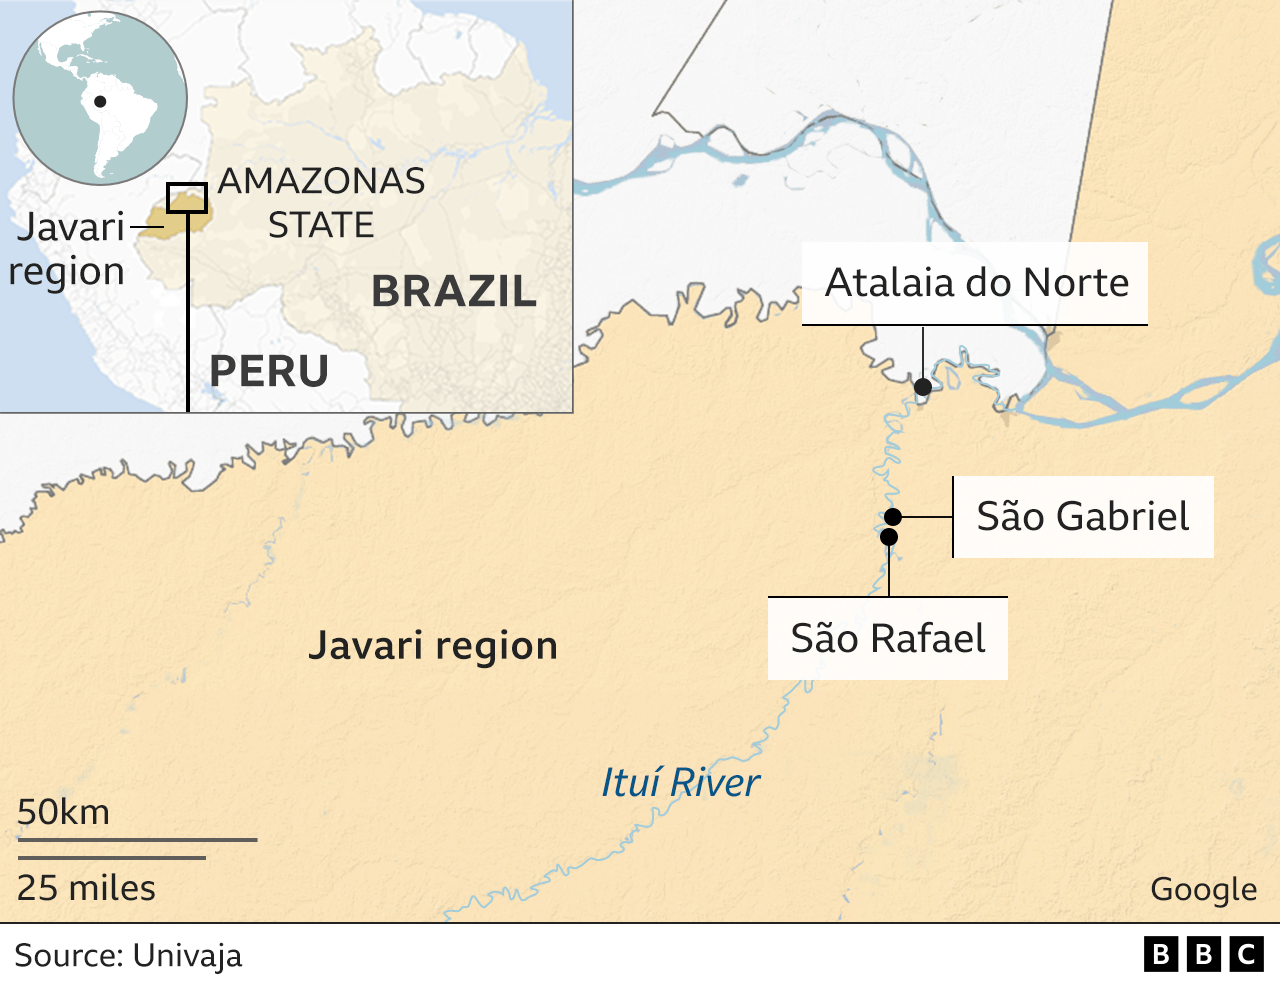 Map shows the Javari region of Brazil